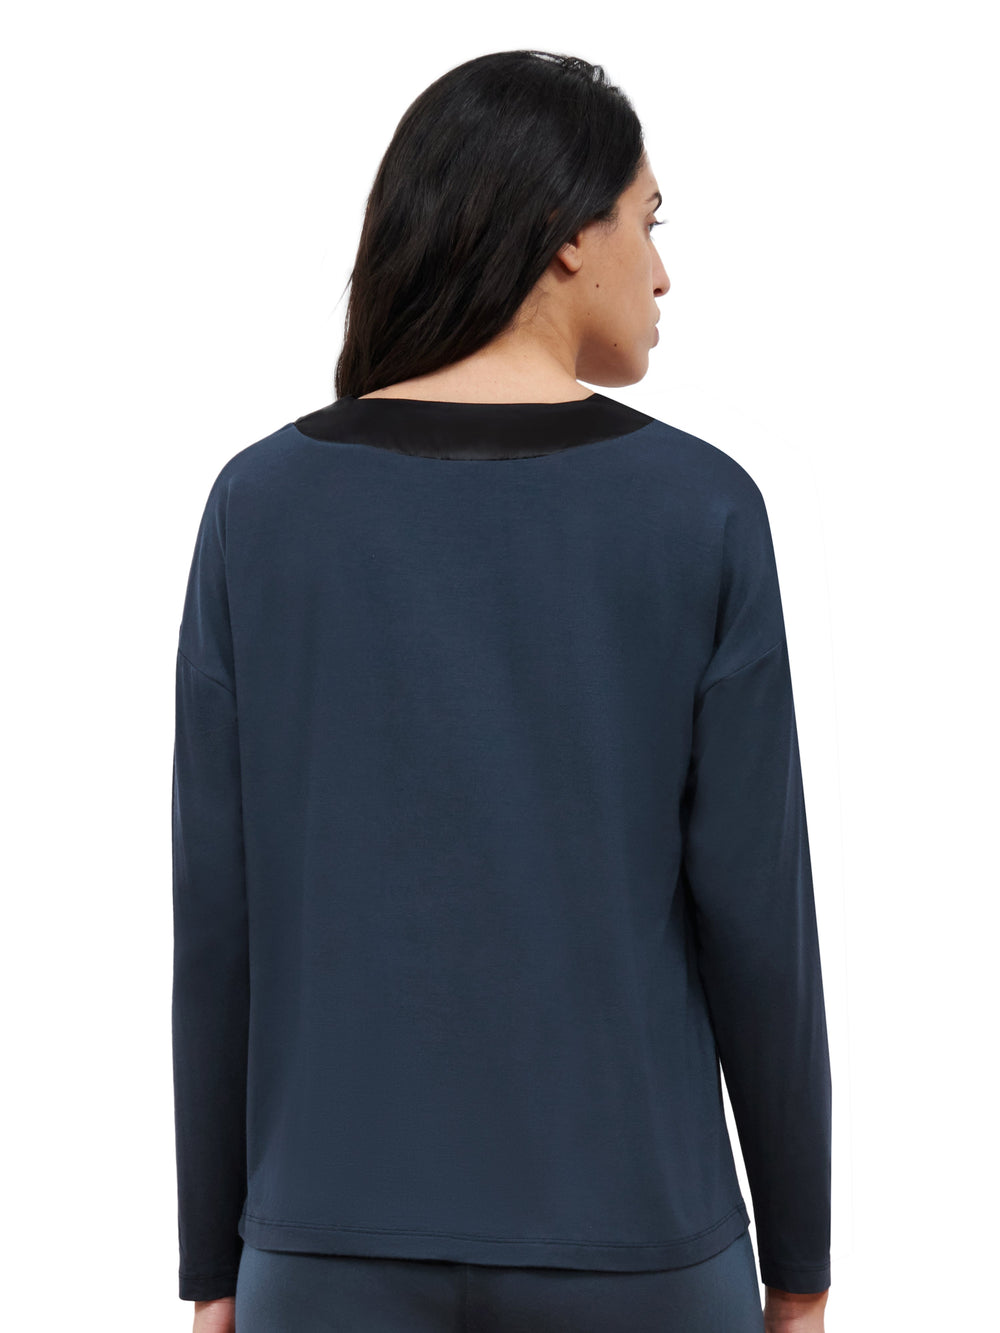 Femilet - Maglietta Lizzy Top pigiama blu scuro blu scuro Femilet